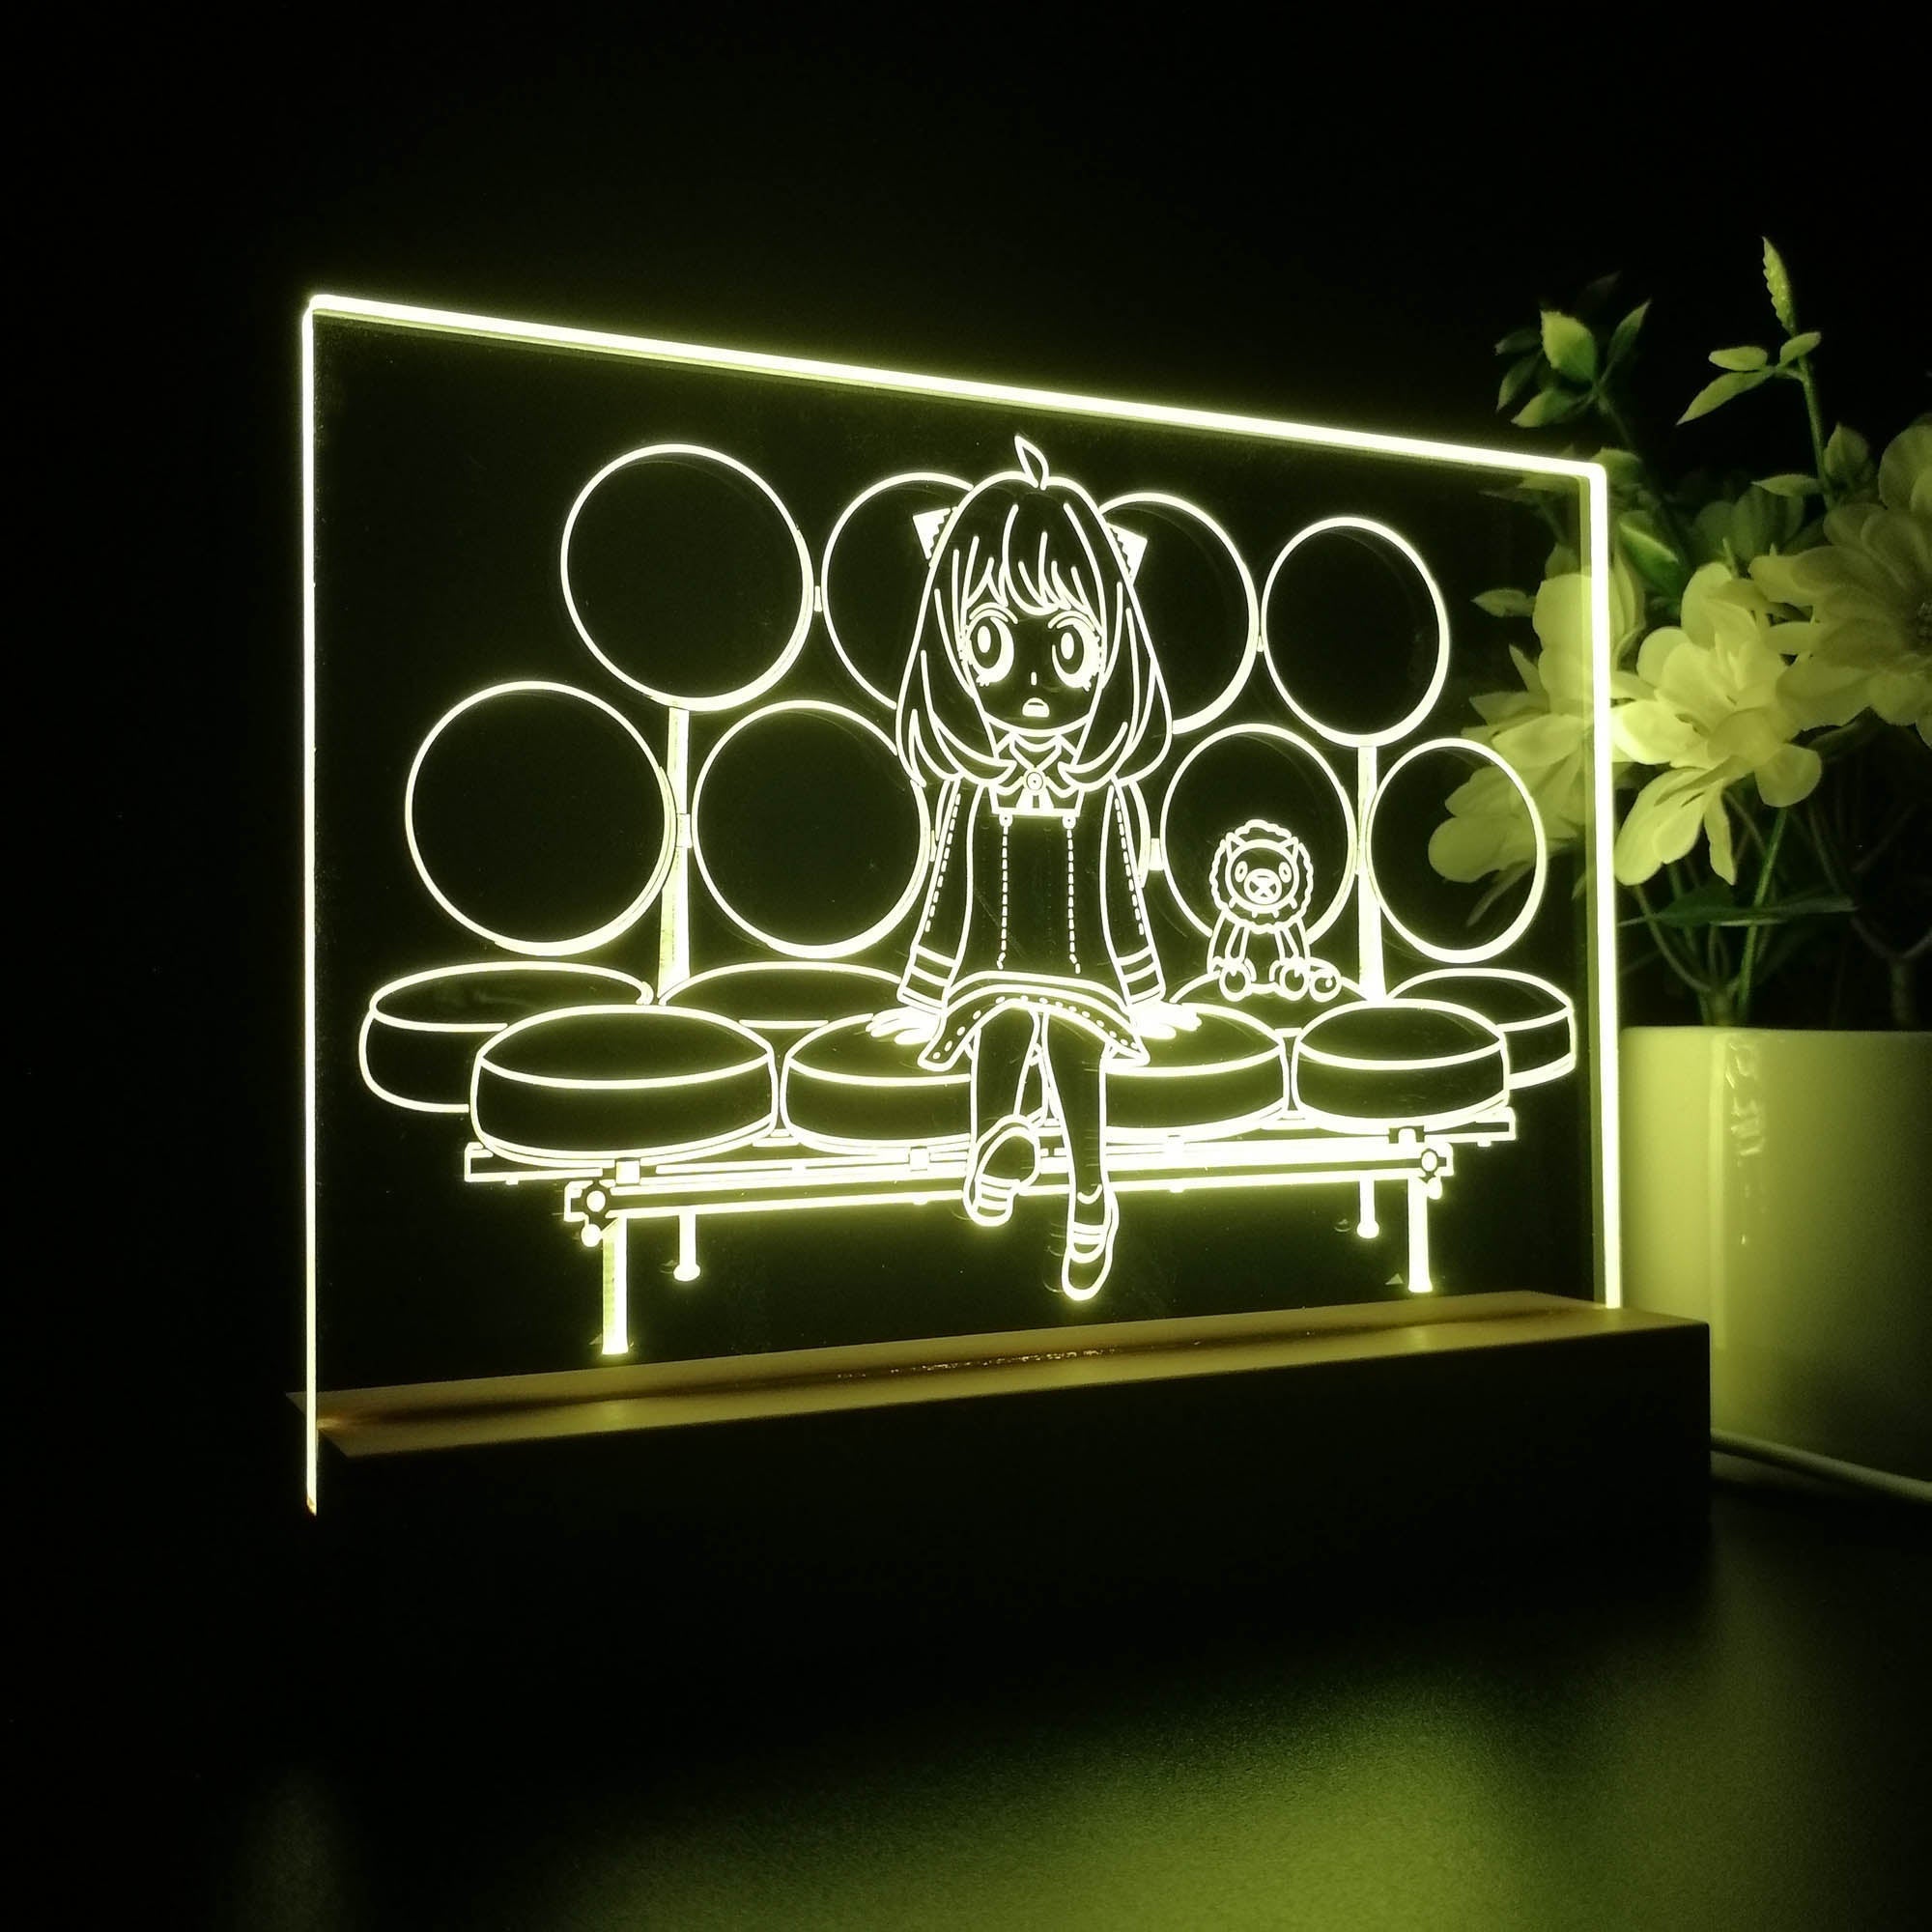 Spy × Family Anya Forger LED Sign Lamp Display